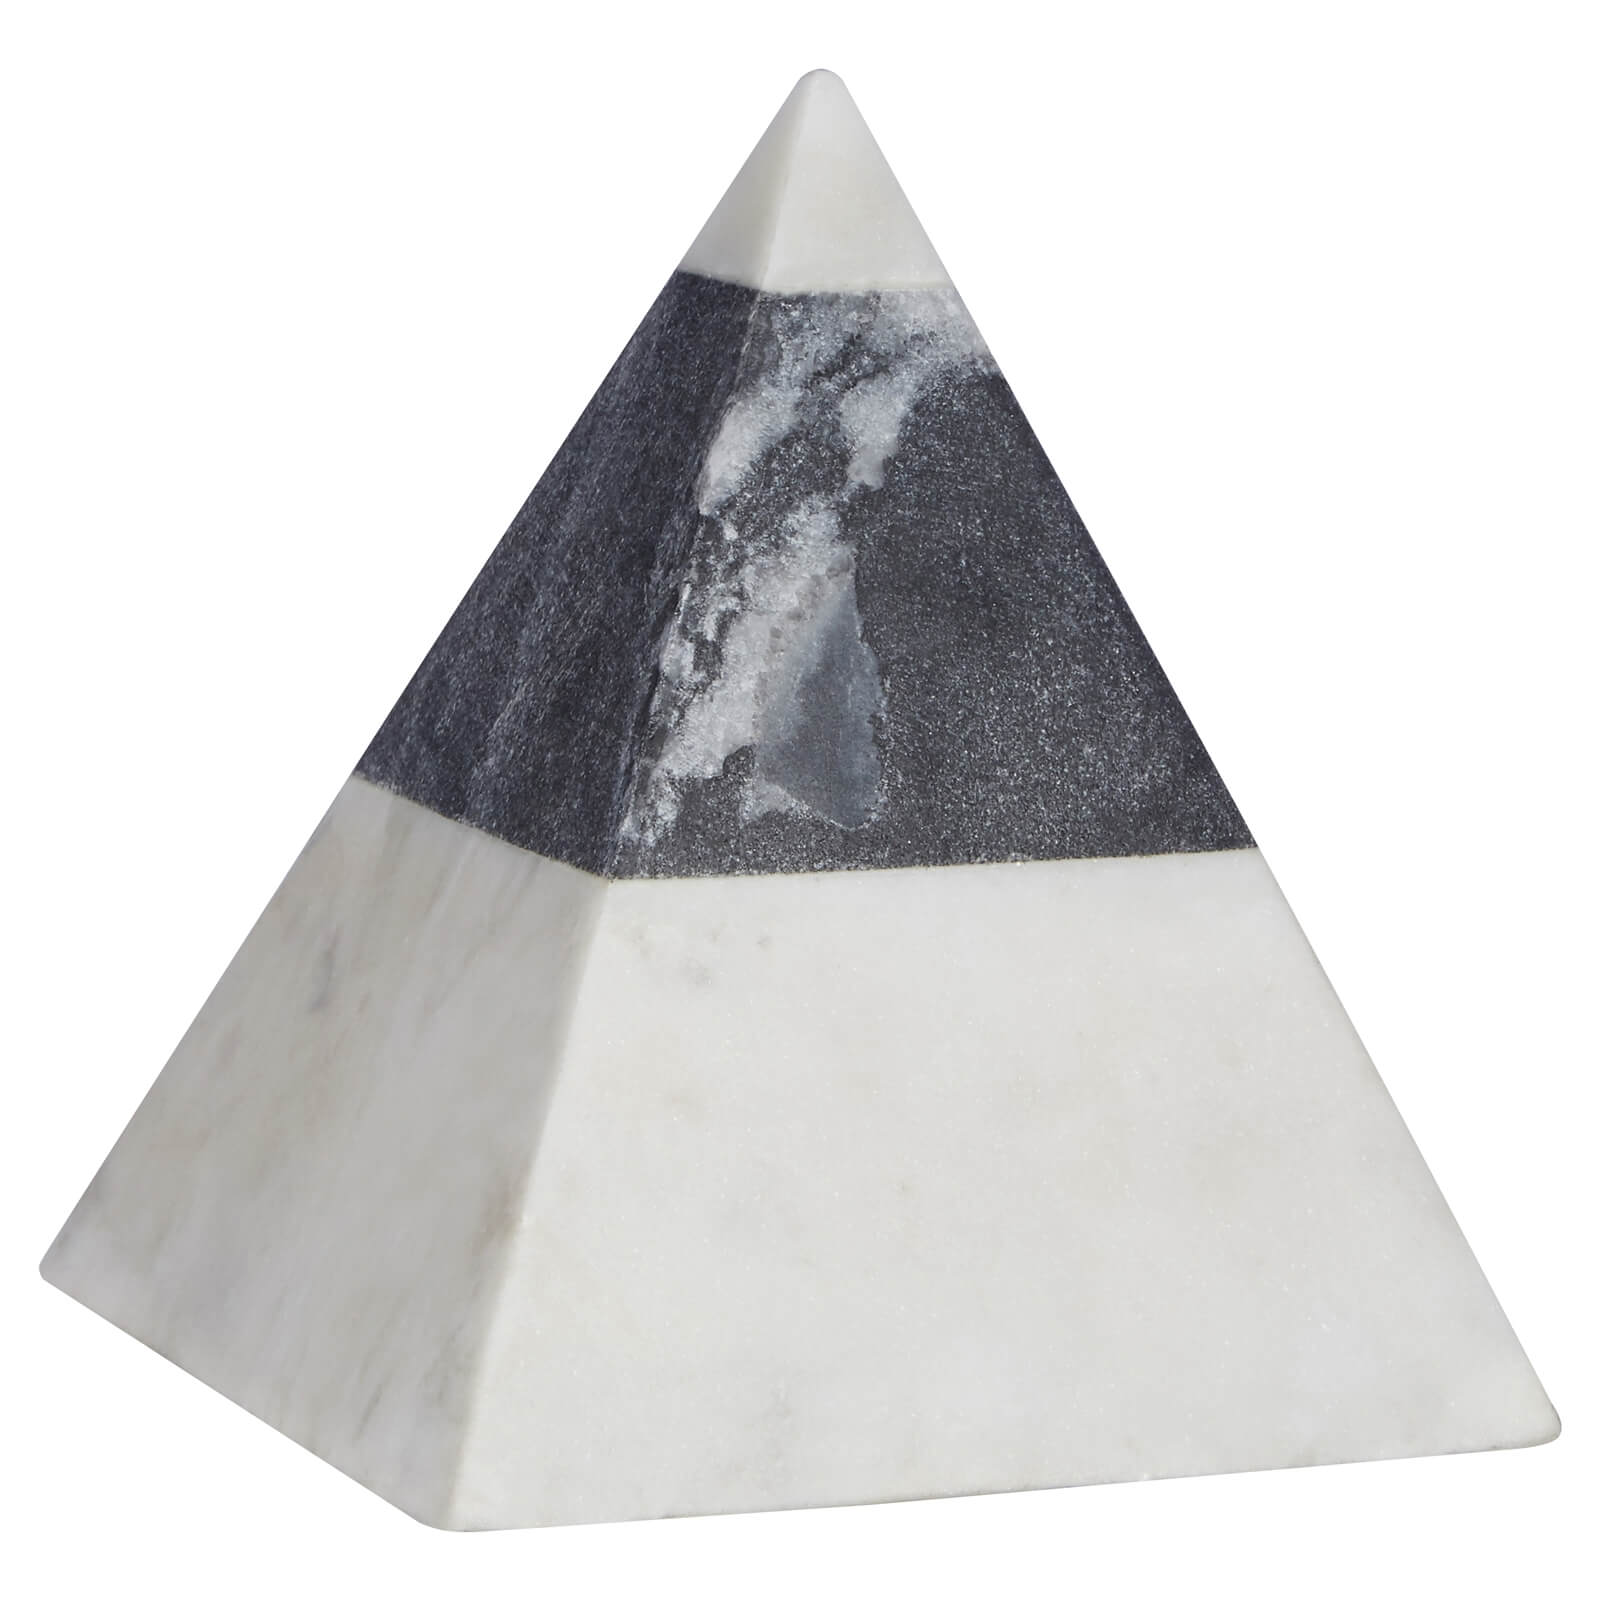 Raven Decorative Pyramid - Large